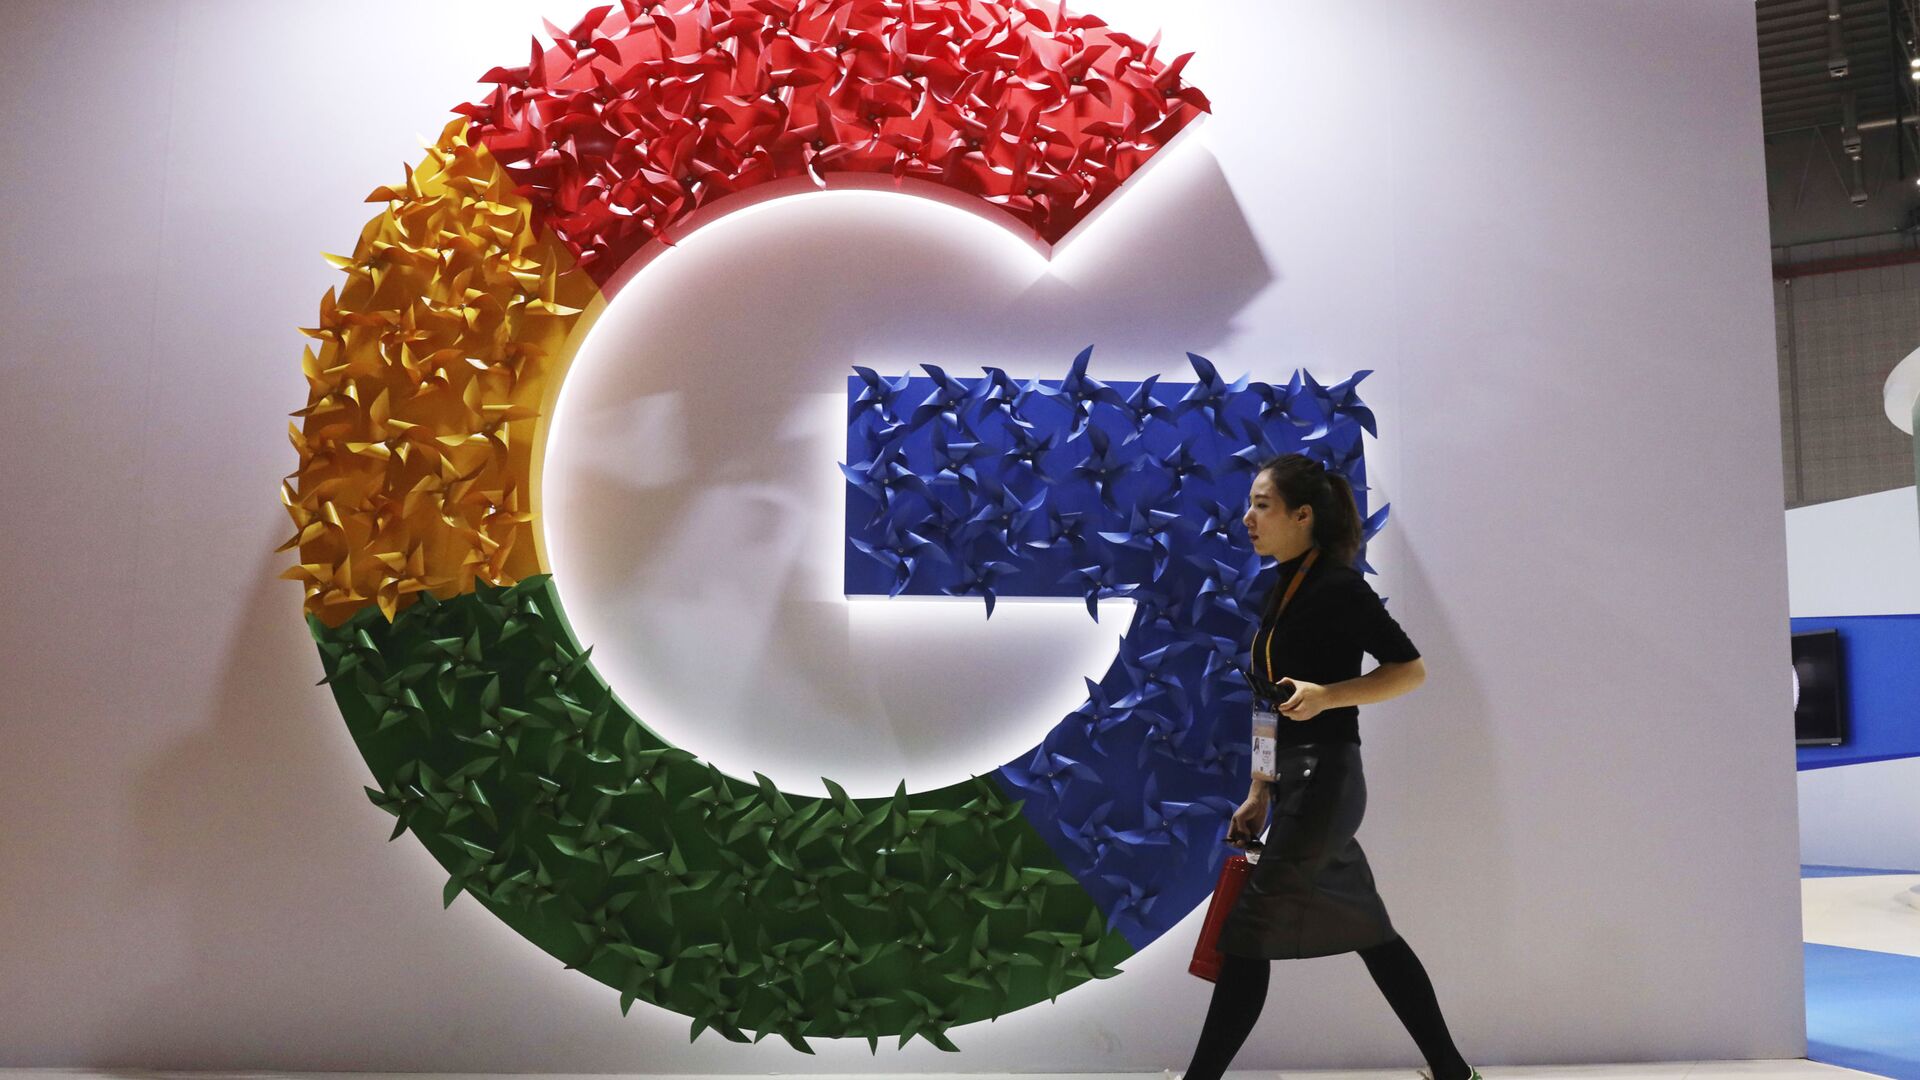 ФАС оштрафовала Google за ненадлежащую рекламу